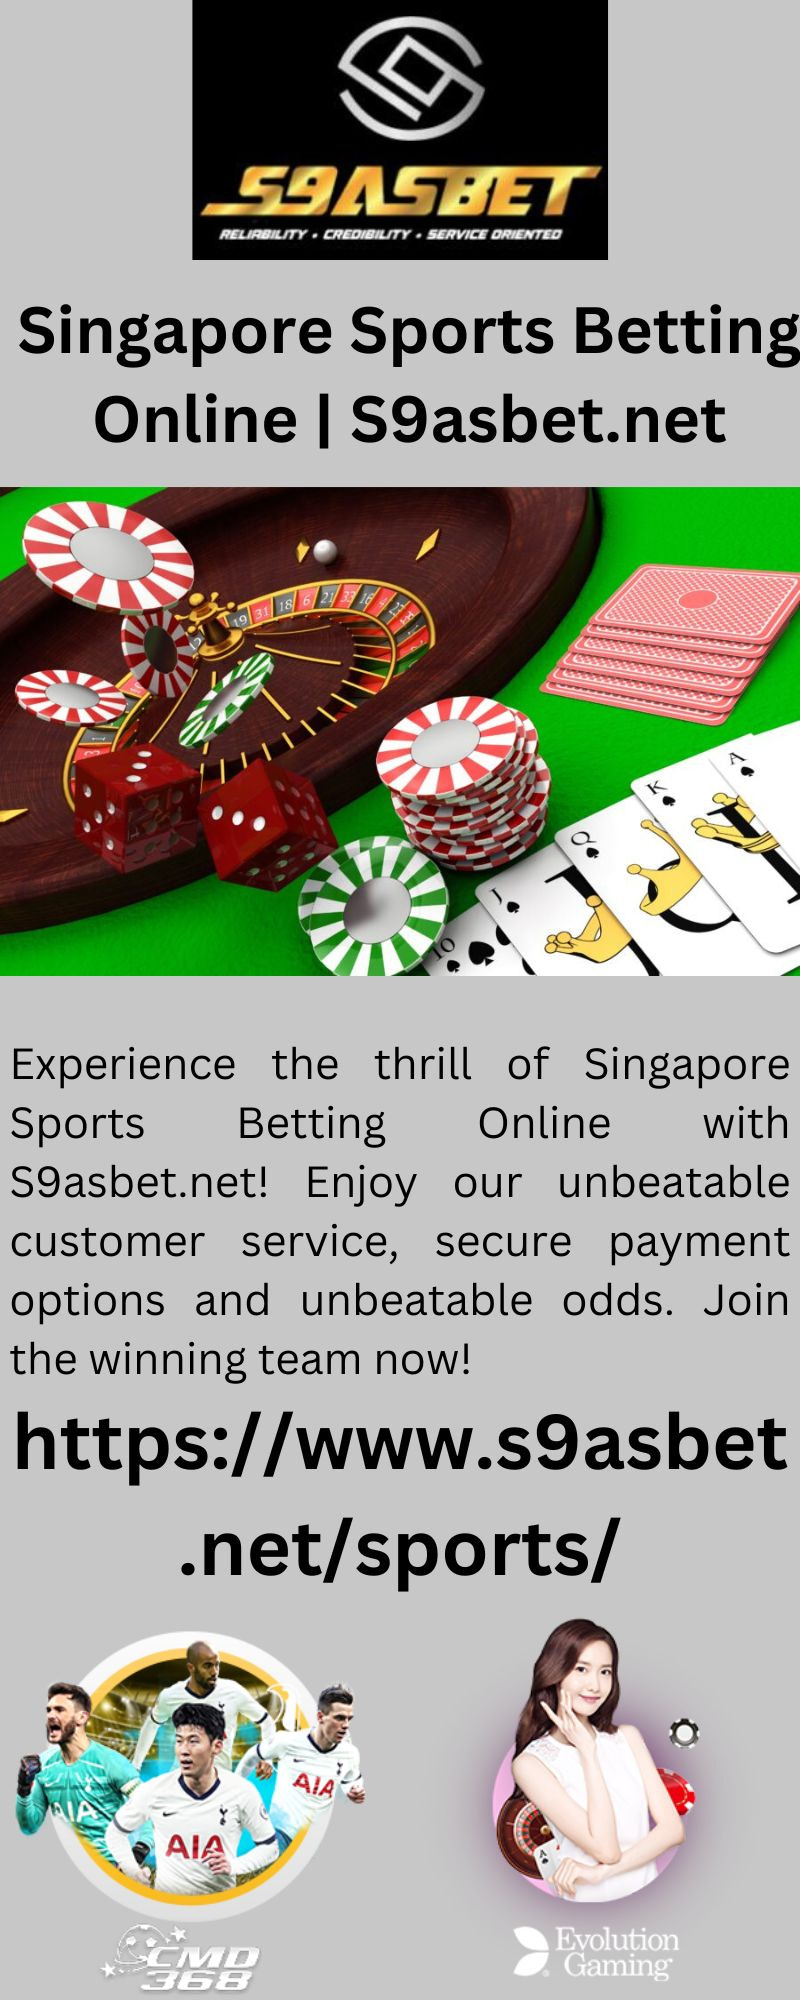 Singapore Sports Betting Online | S9asbet.net - 1